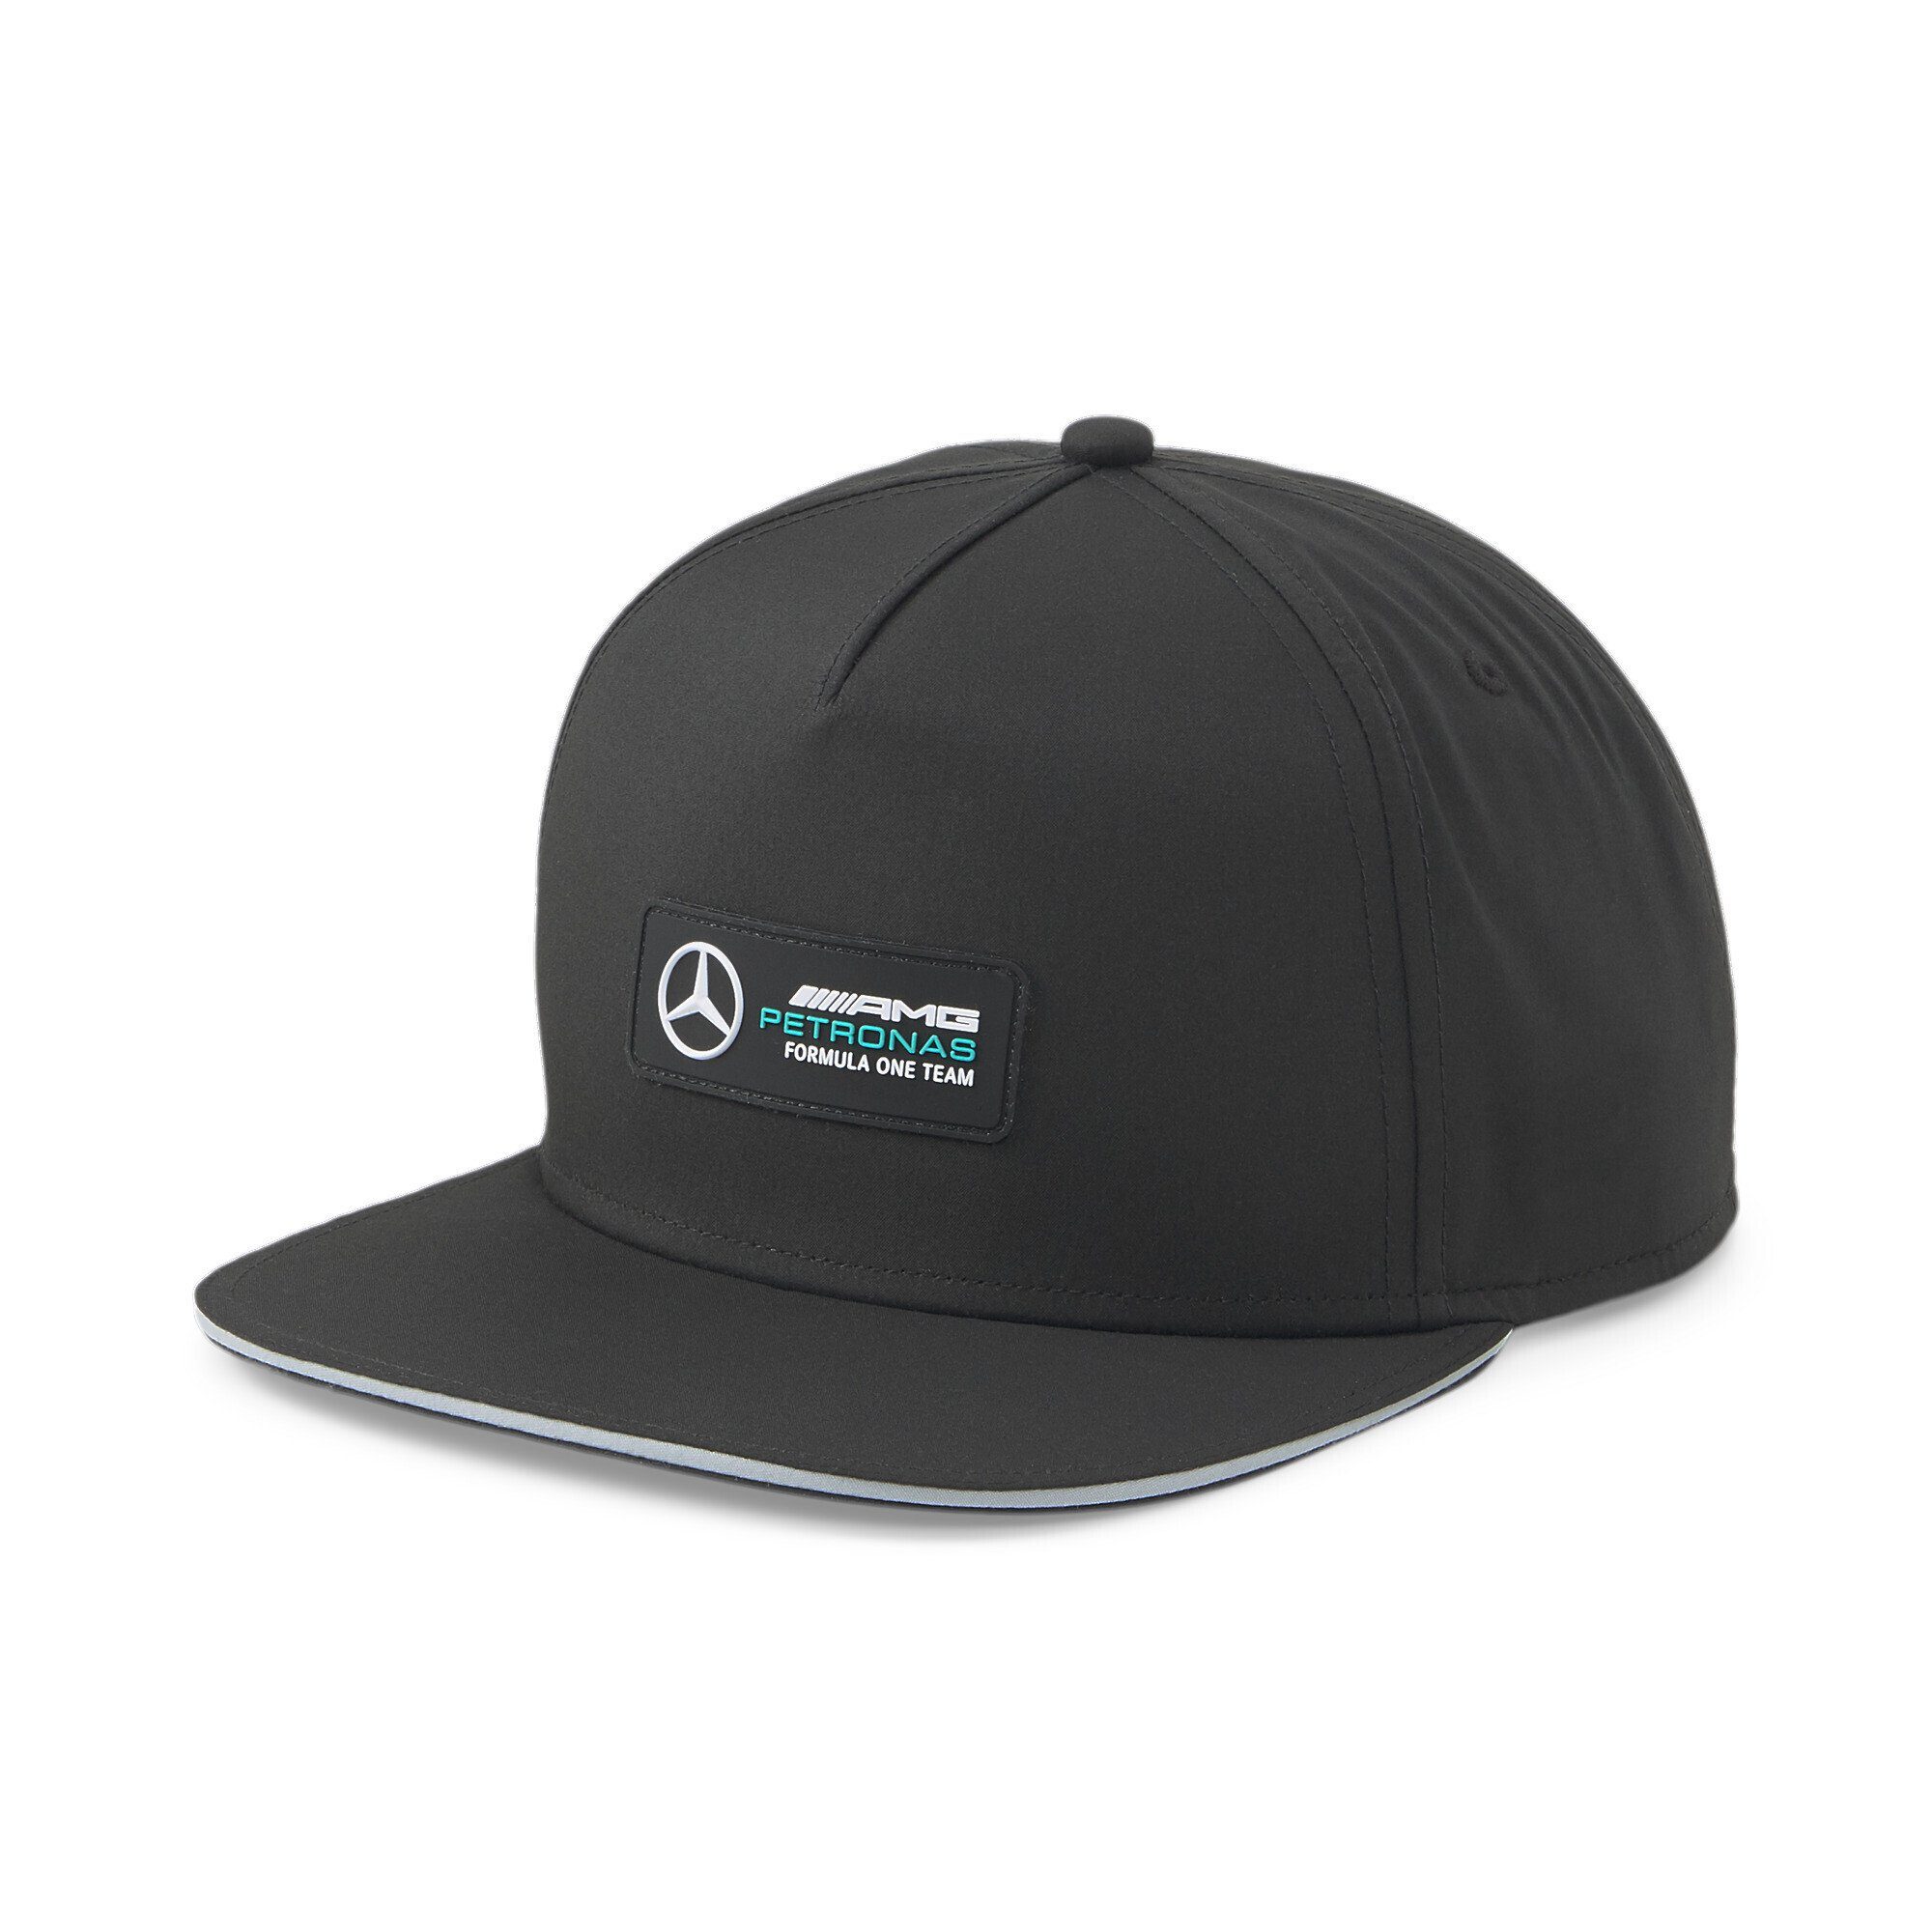 Cap flachem Schirm Motorsport Petronas Herren Cap Mercedes-AMG Flex mit PUMA